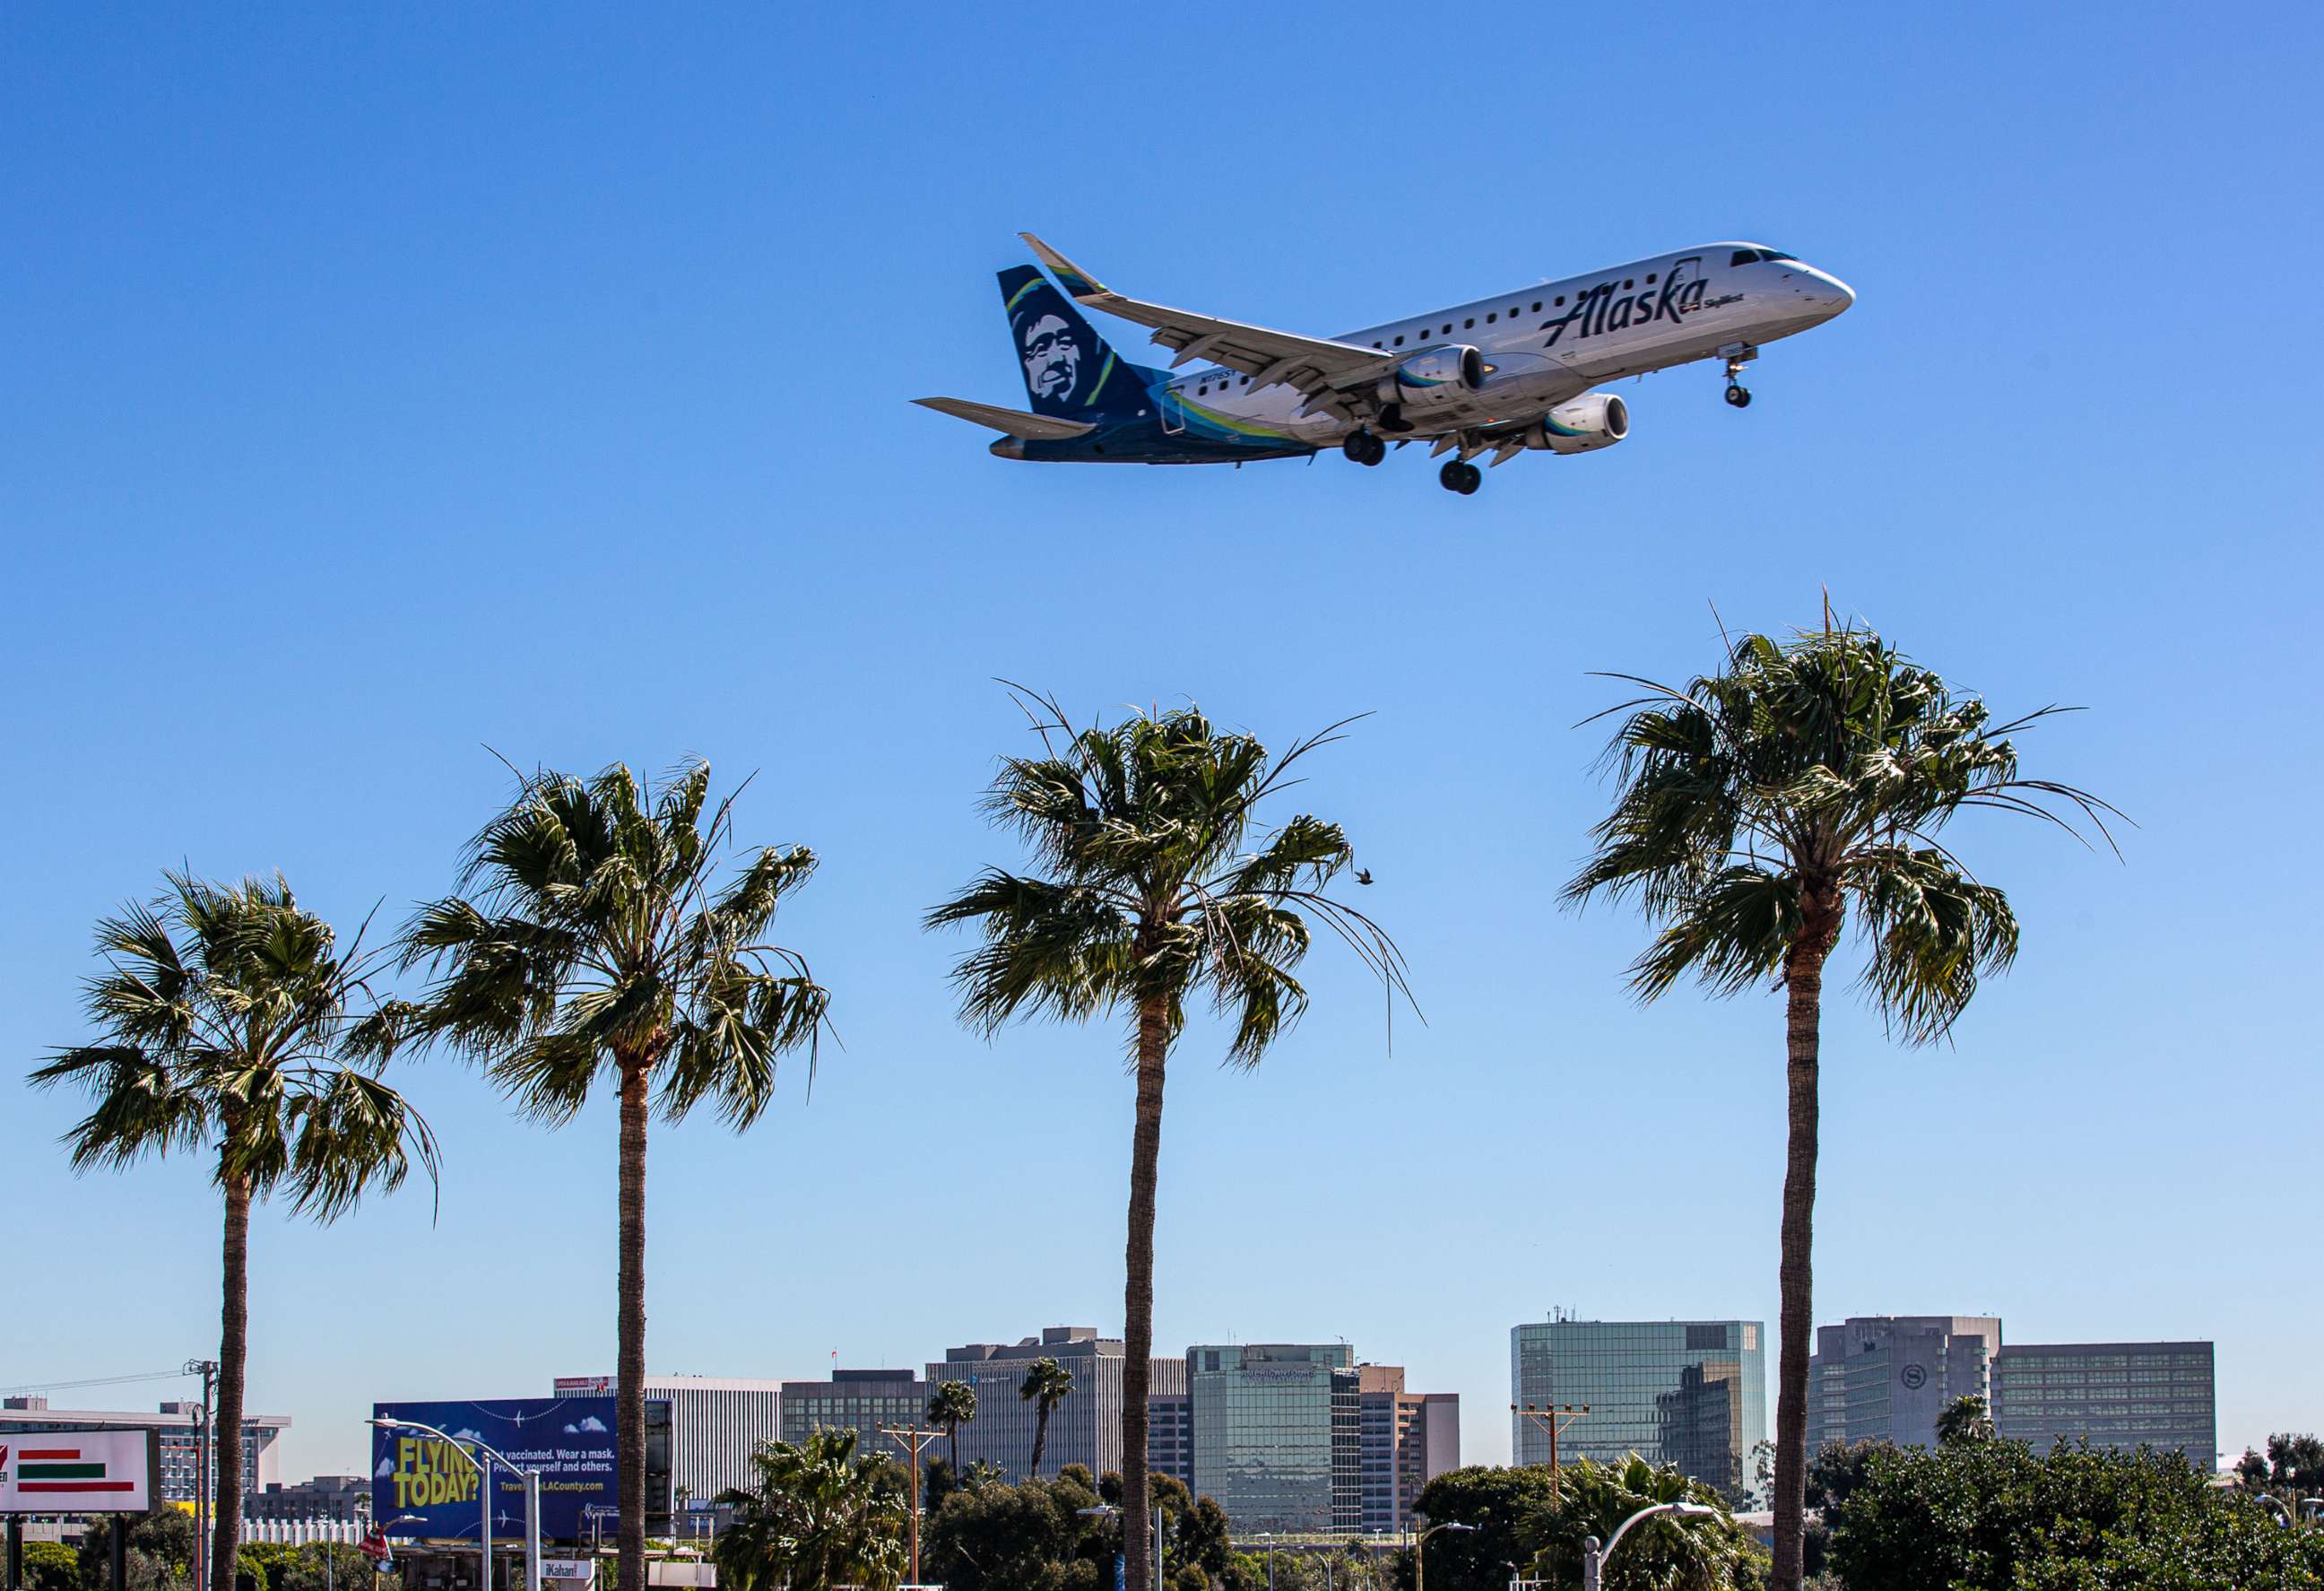 PHOTO: An Alaska airline plane flies near the Los Angeles International Airport on Feb. 7, 2022 in Los Angeles.